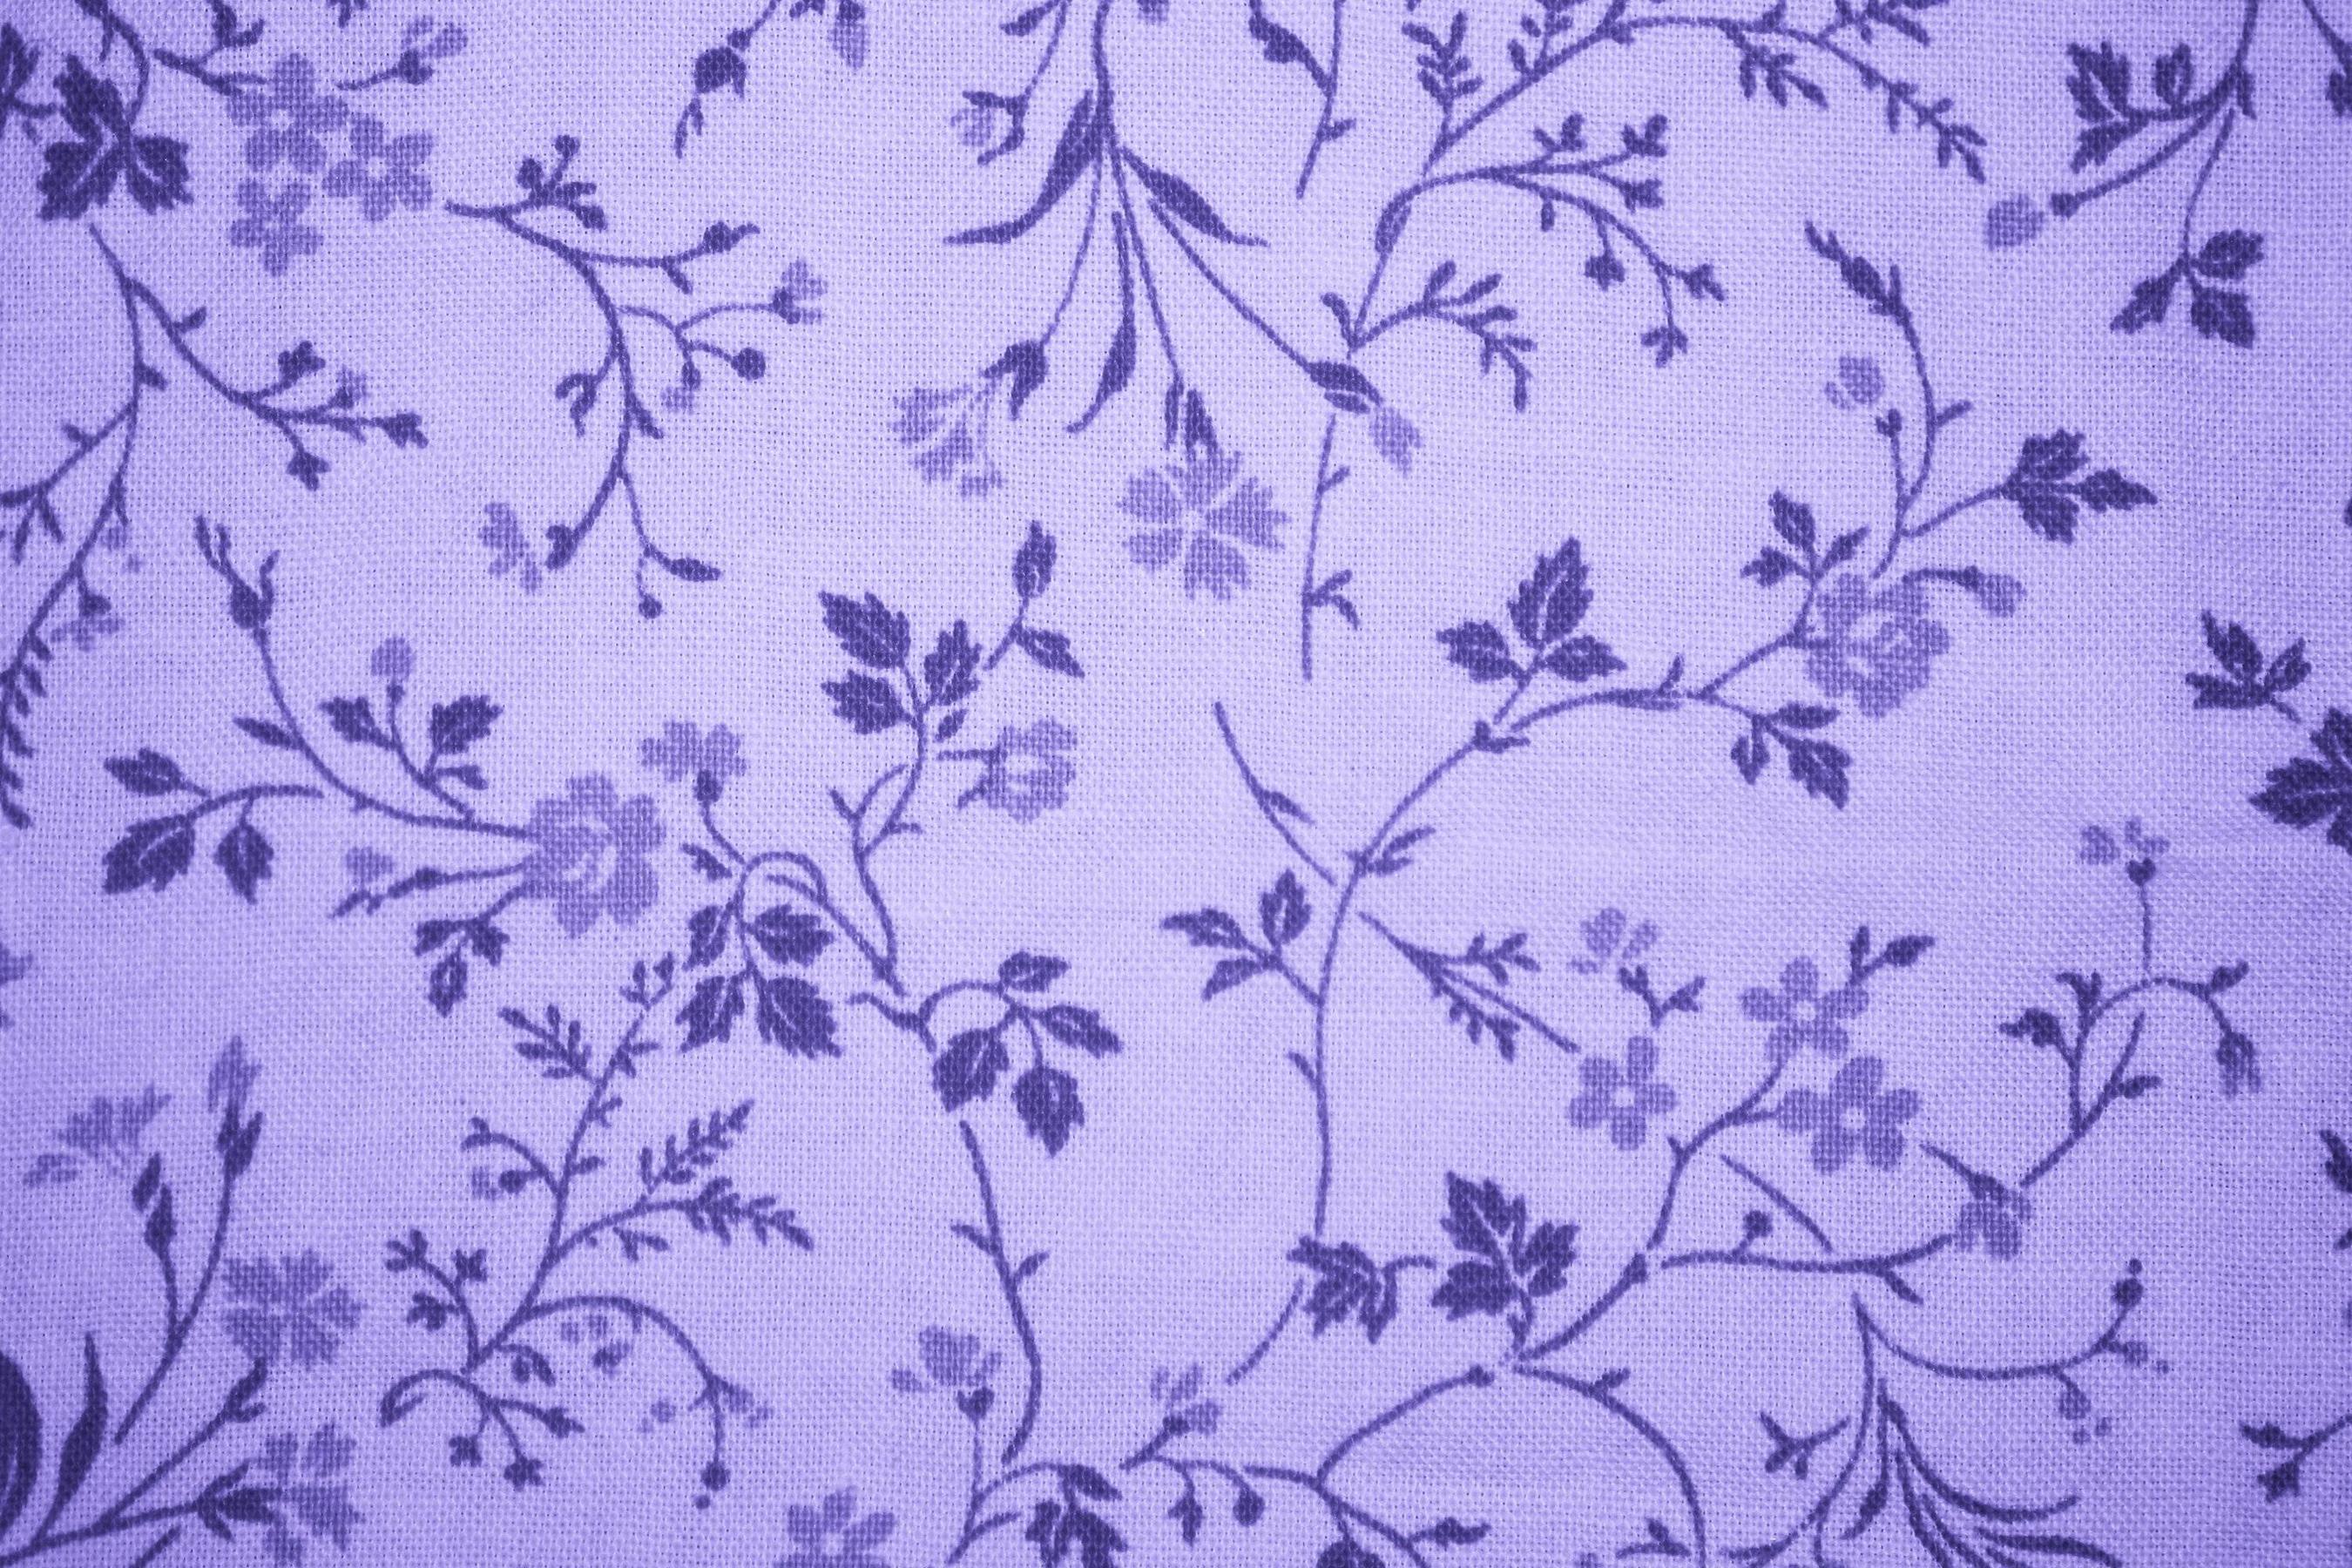 Lavender Floral Print Fabric Texture Picture. Free Photograph